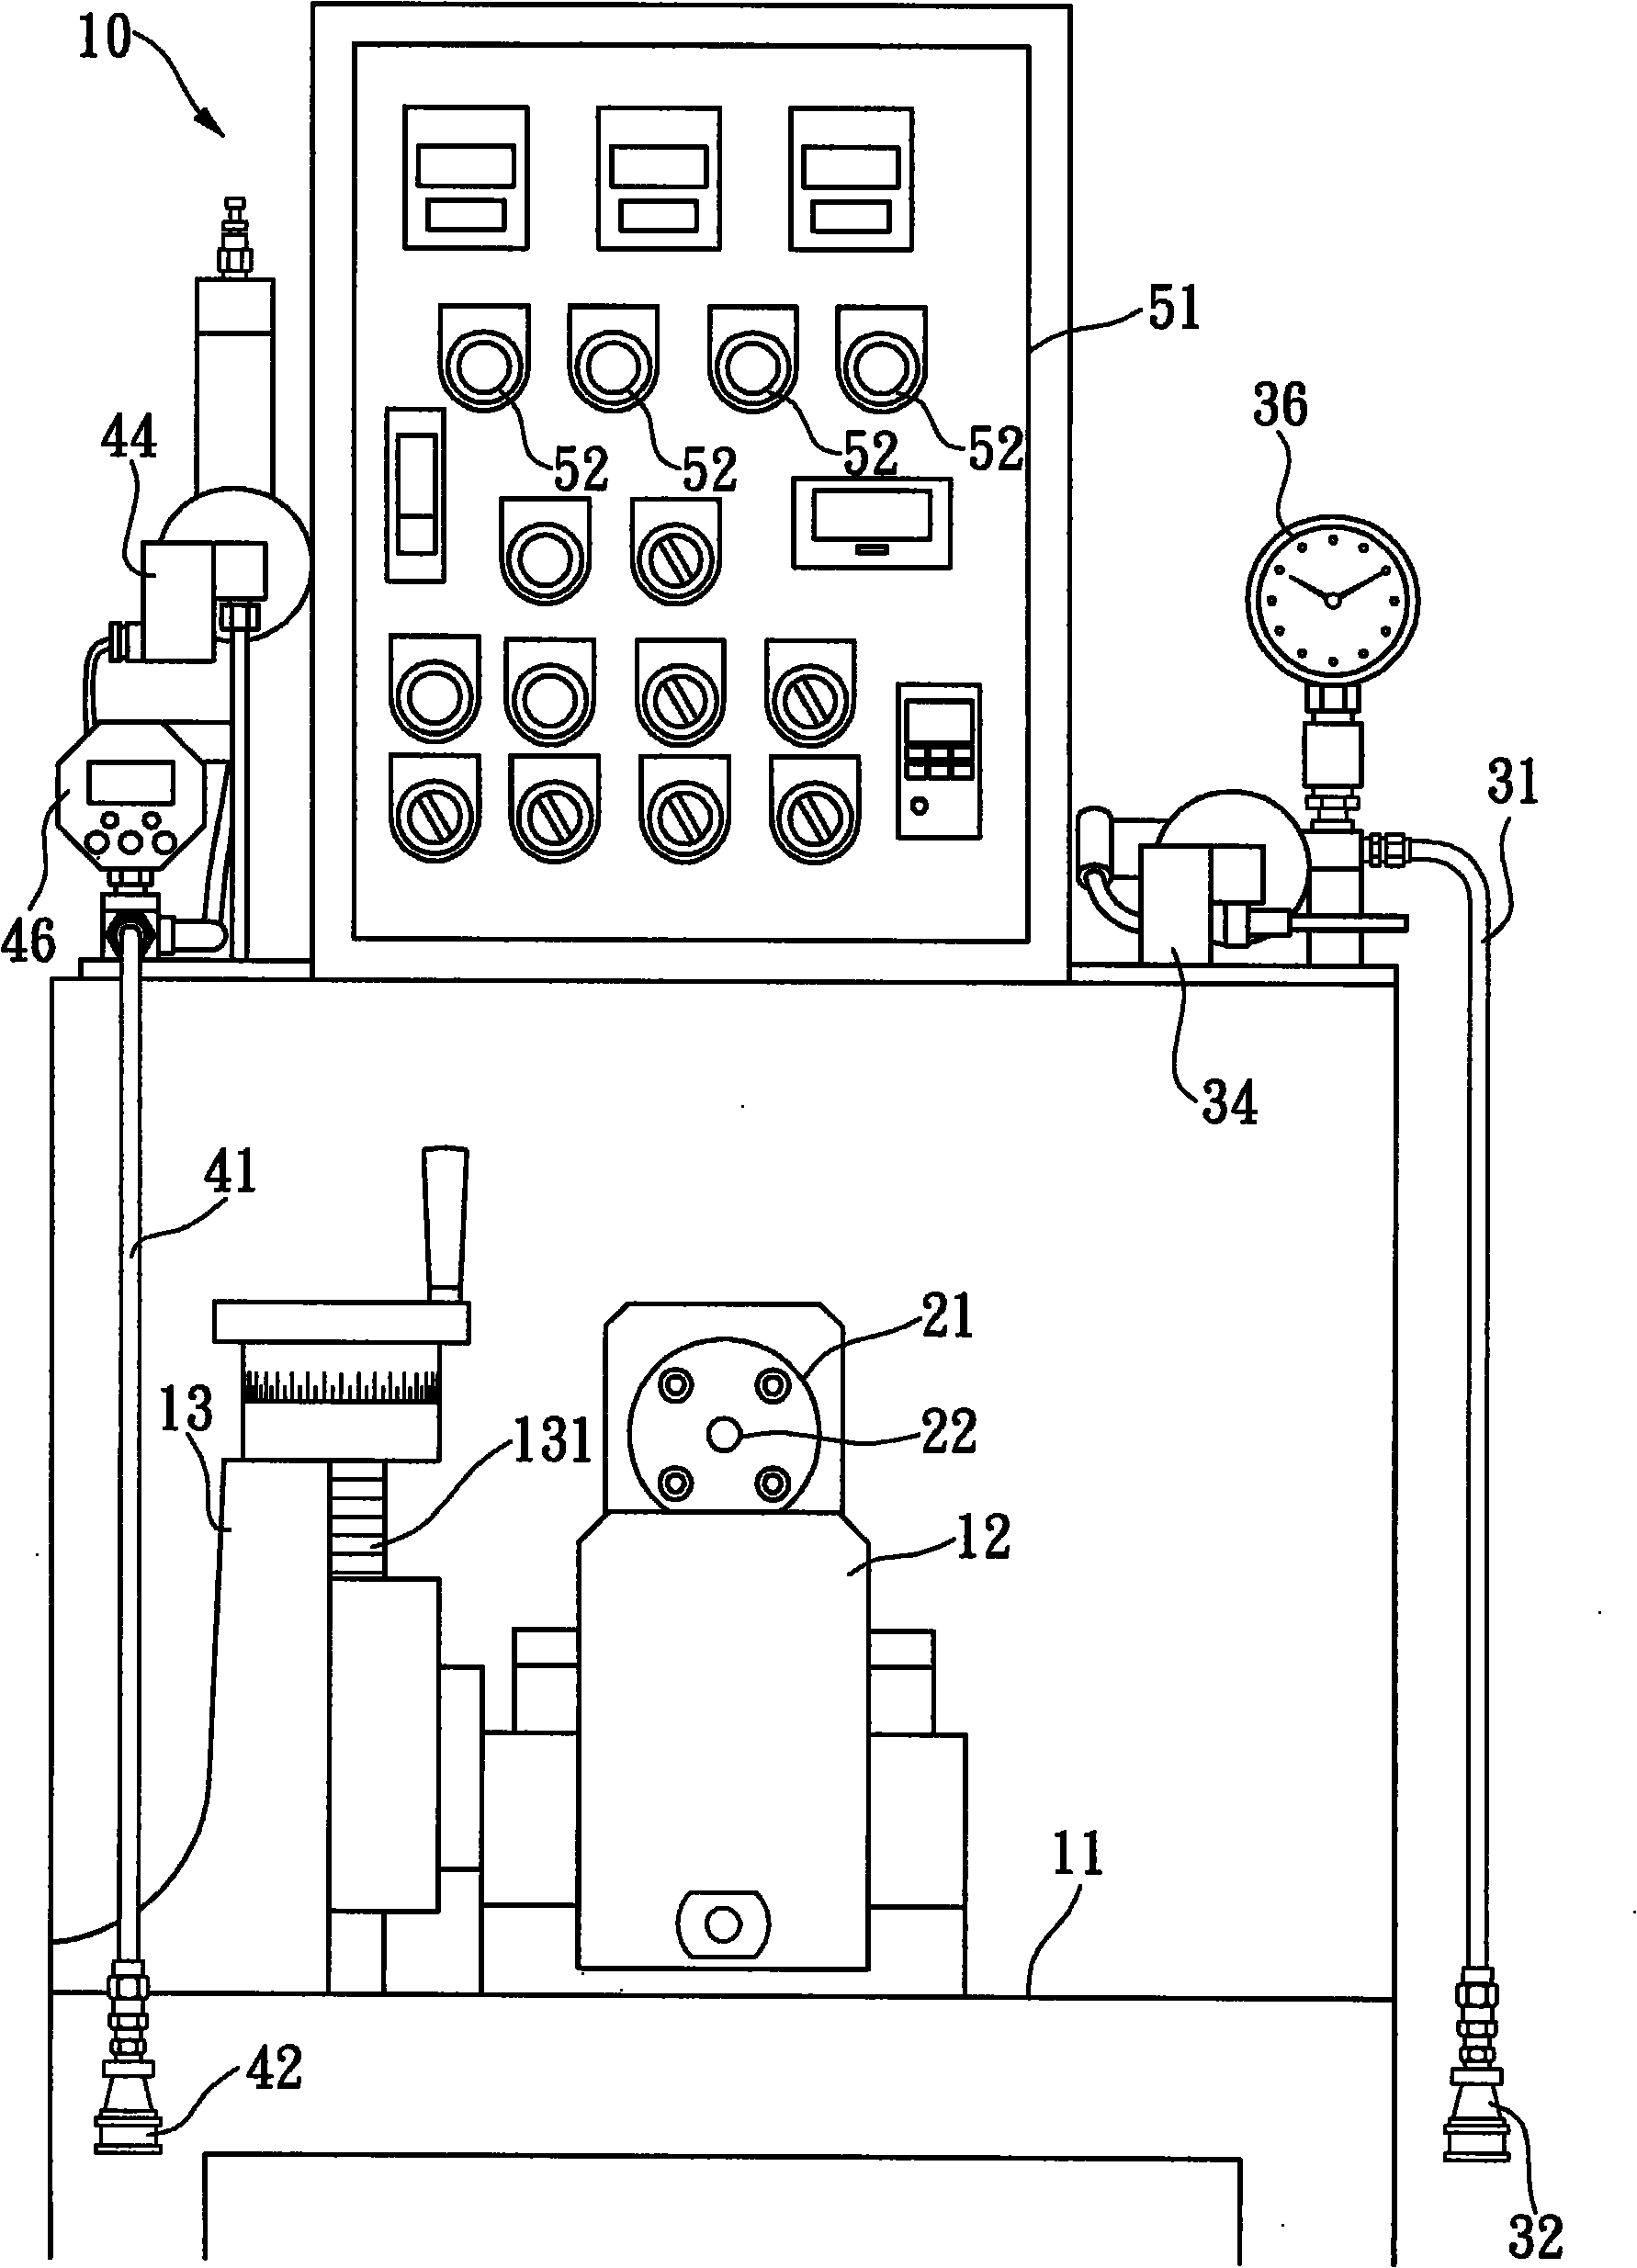 Pressure measuring unit of compressor